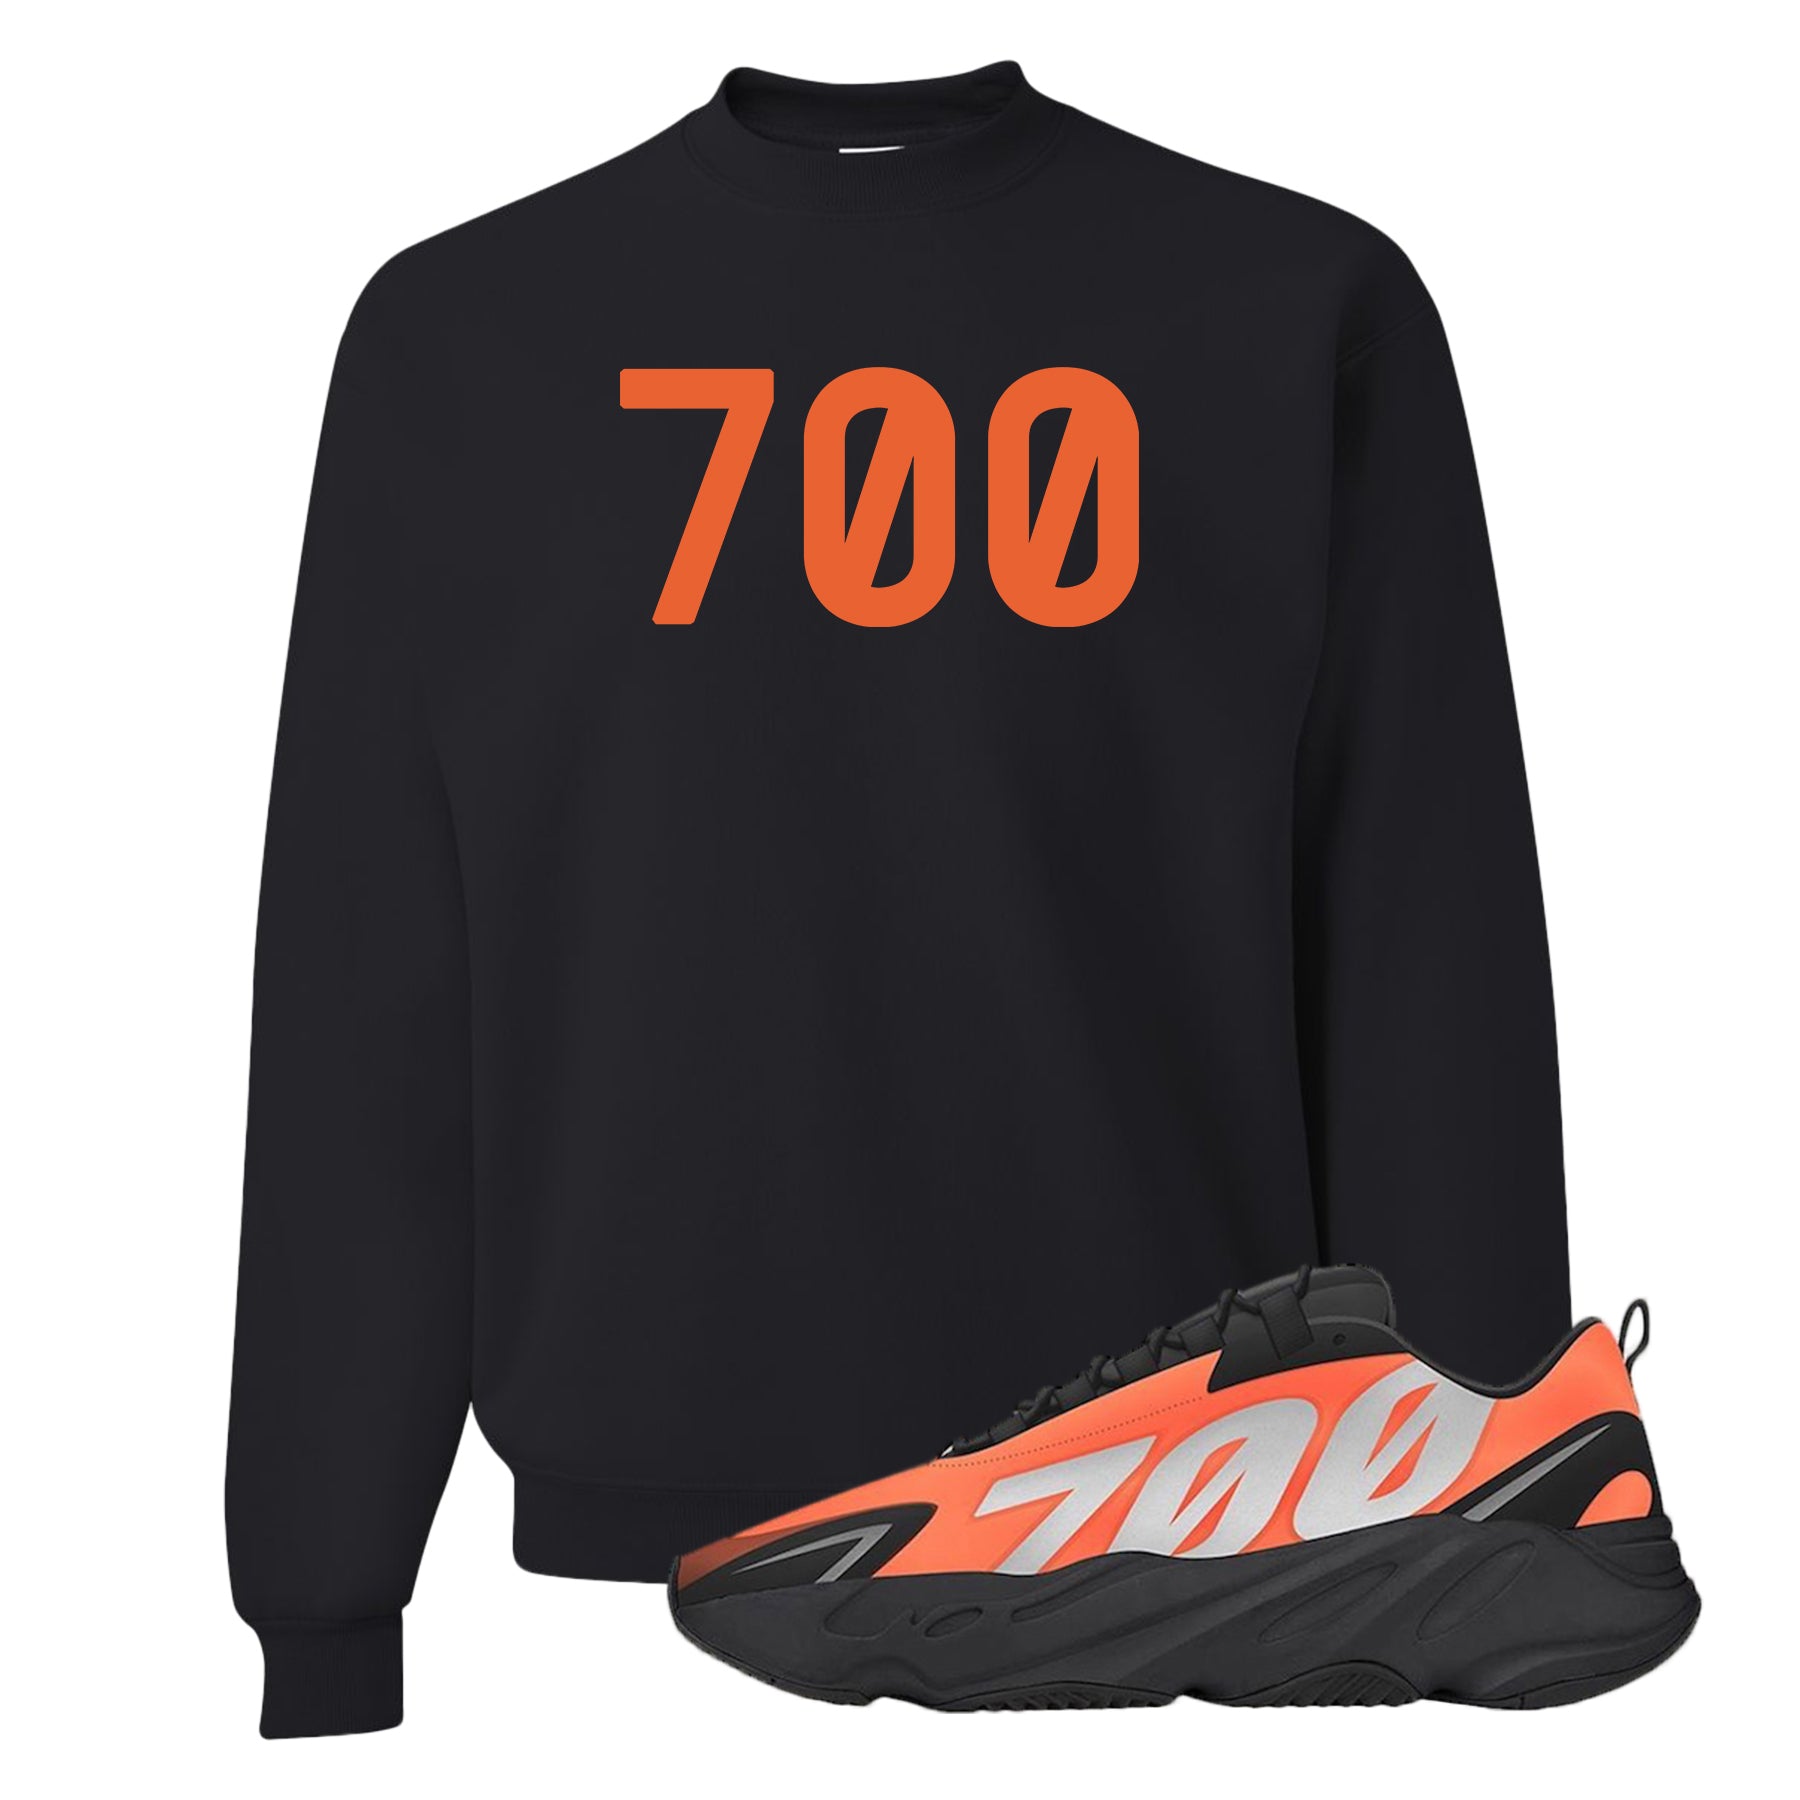 Cheap Size 105 Adidas Yeezy Boost 350 V2 Black Reflective 2019